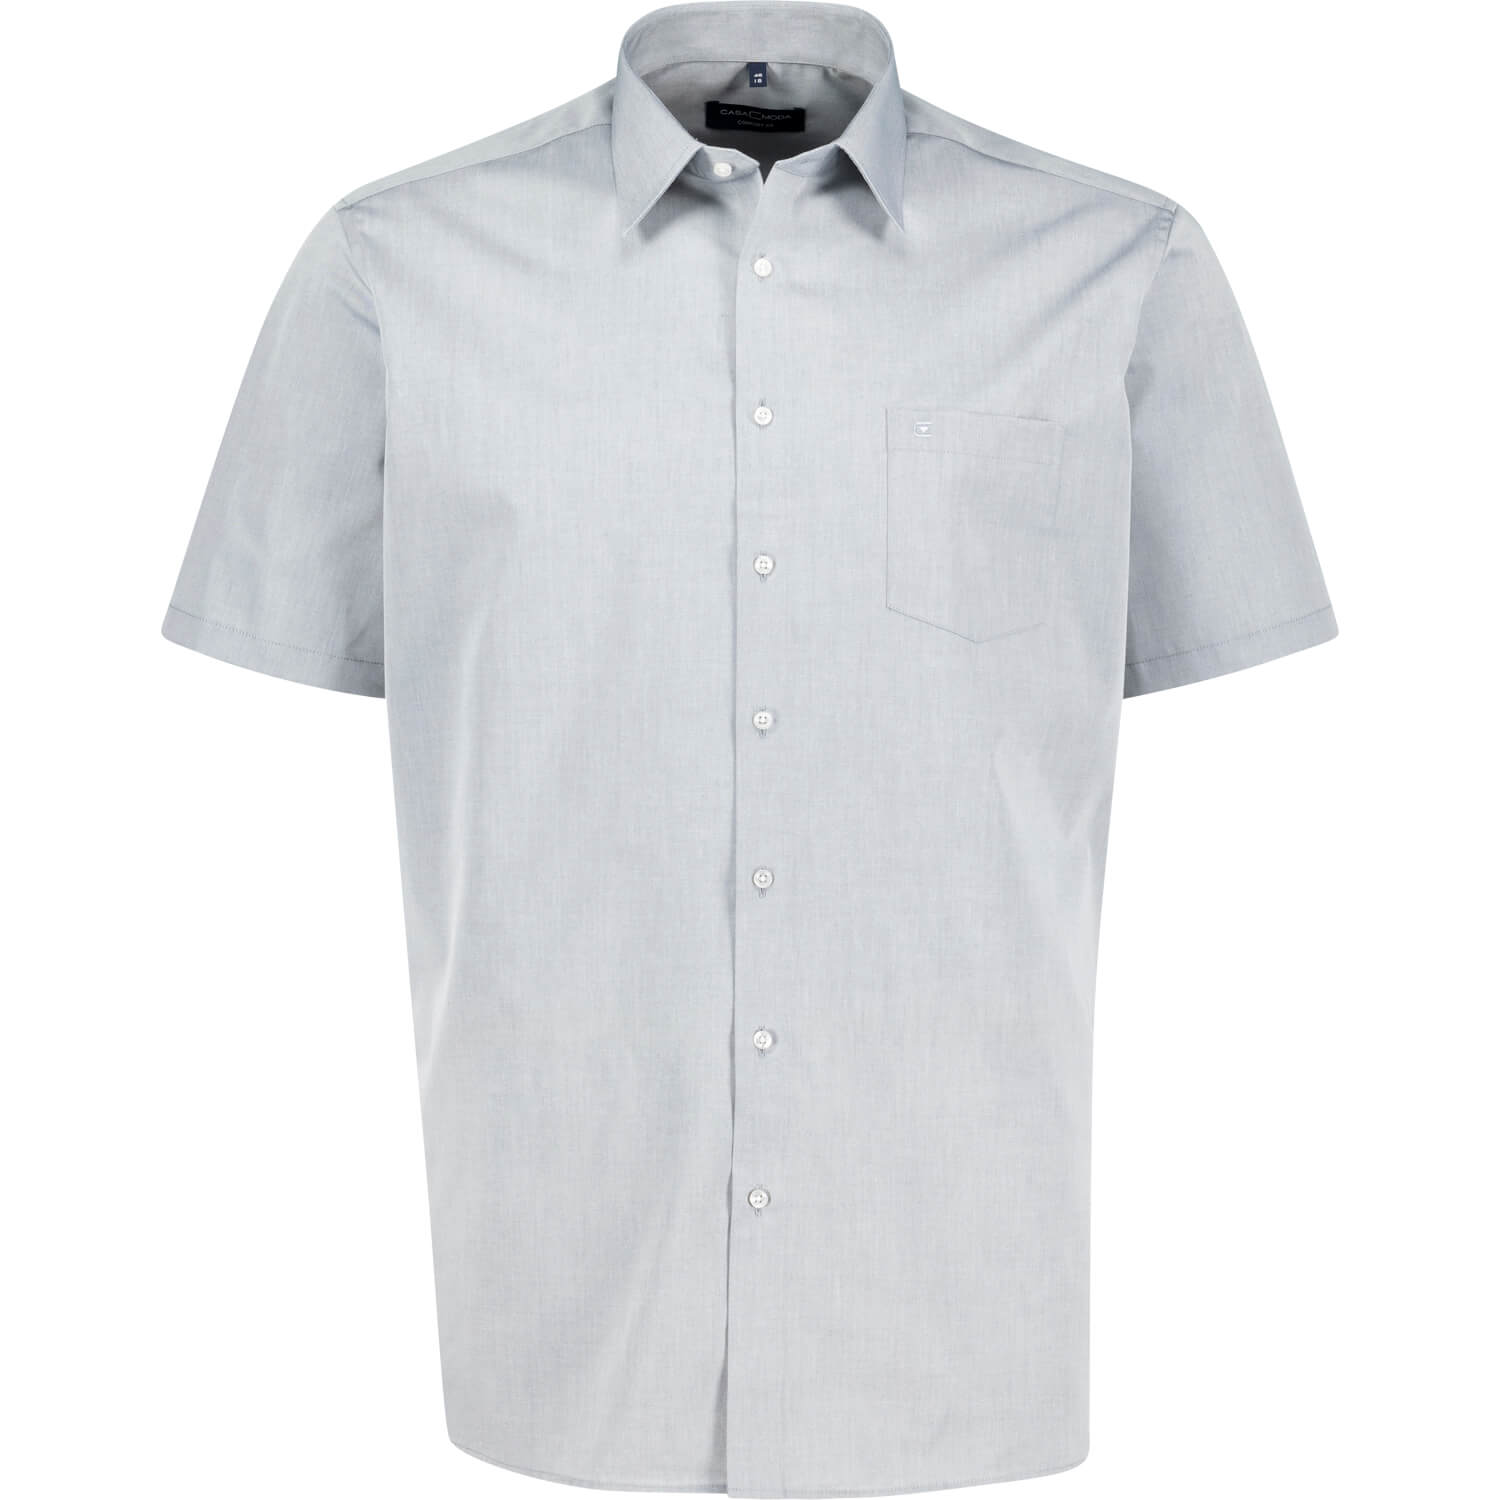 Short sleeve shirt in light grey by Casamoda up tp oversize 7XL